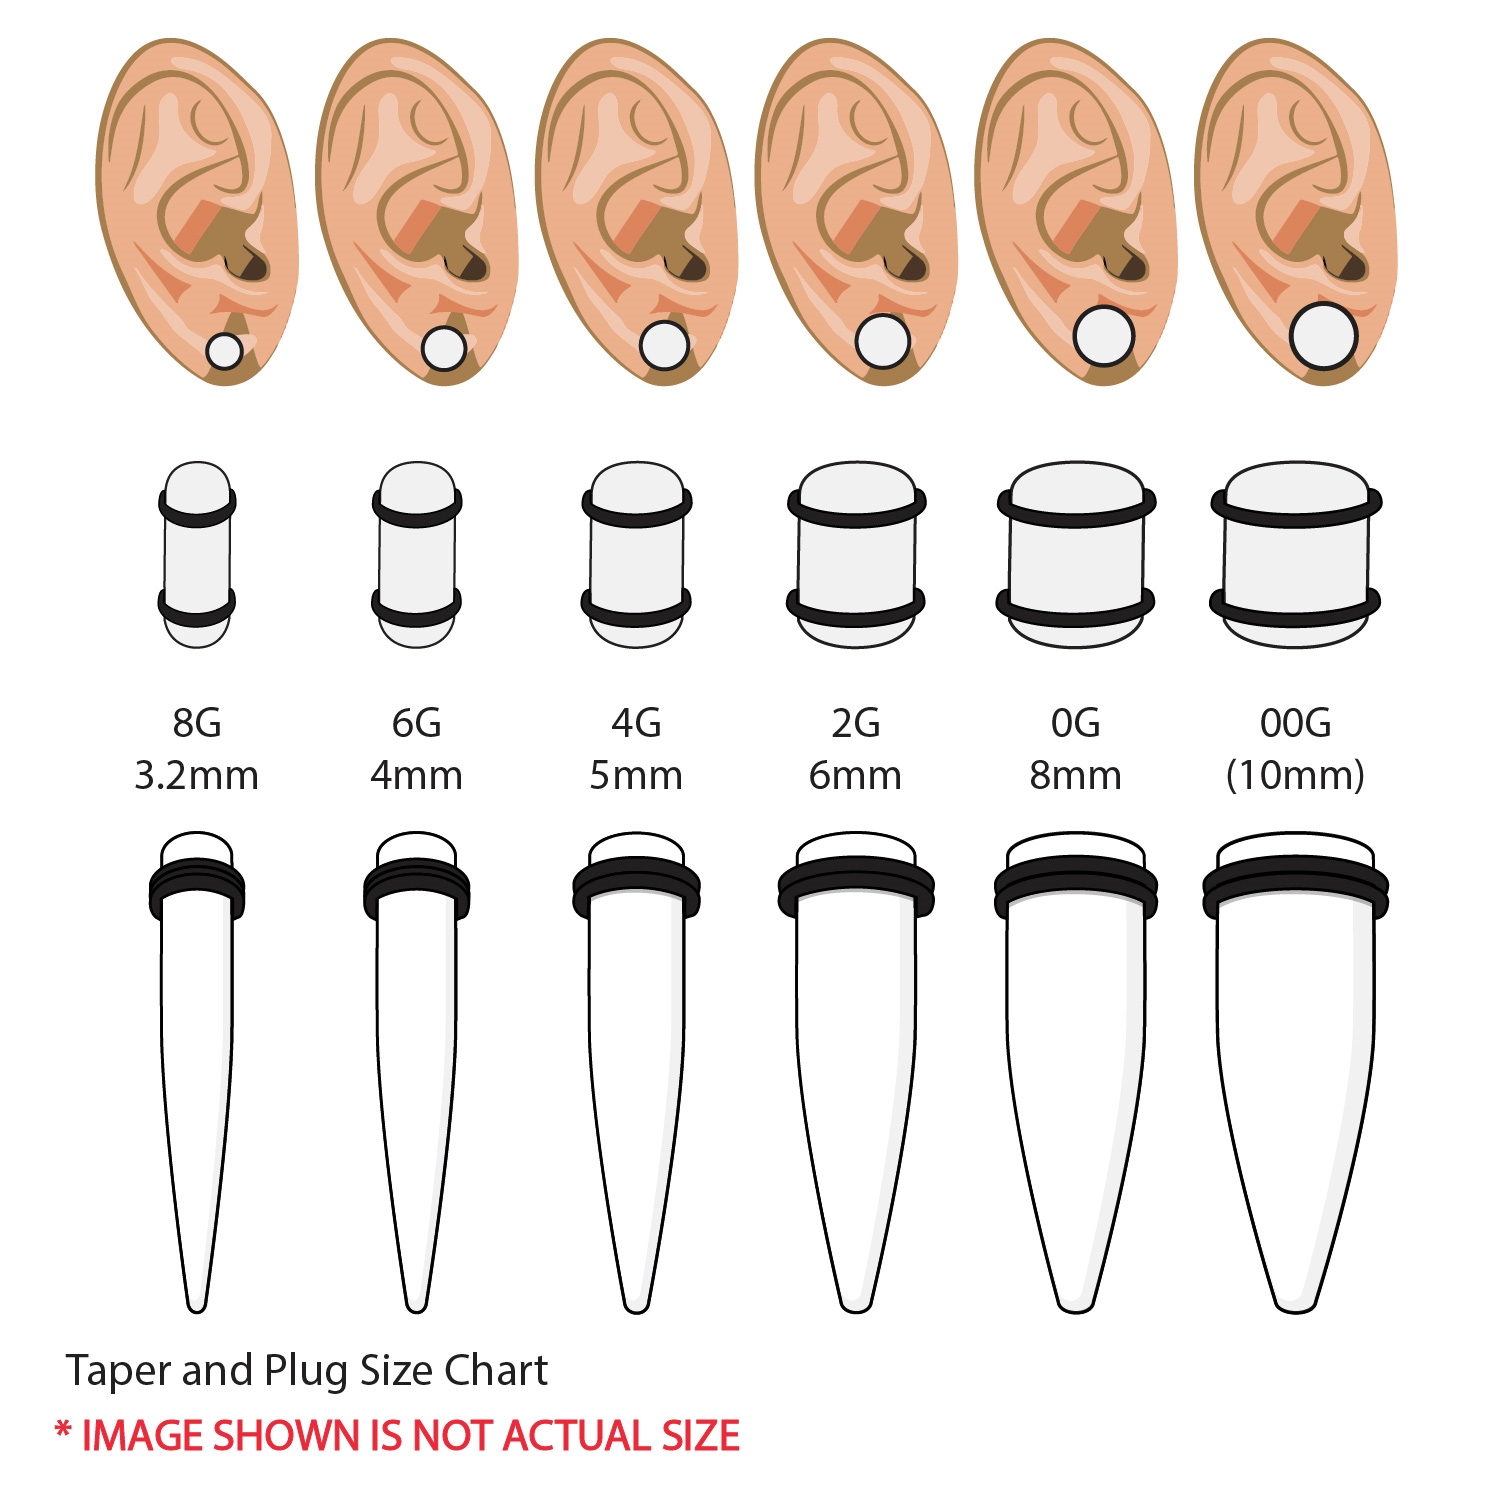 Bodyj4you 36pc Gauges Kit Ear Stretching 8g 00g Spiral Tapers Plugs Piercing Set Ebay